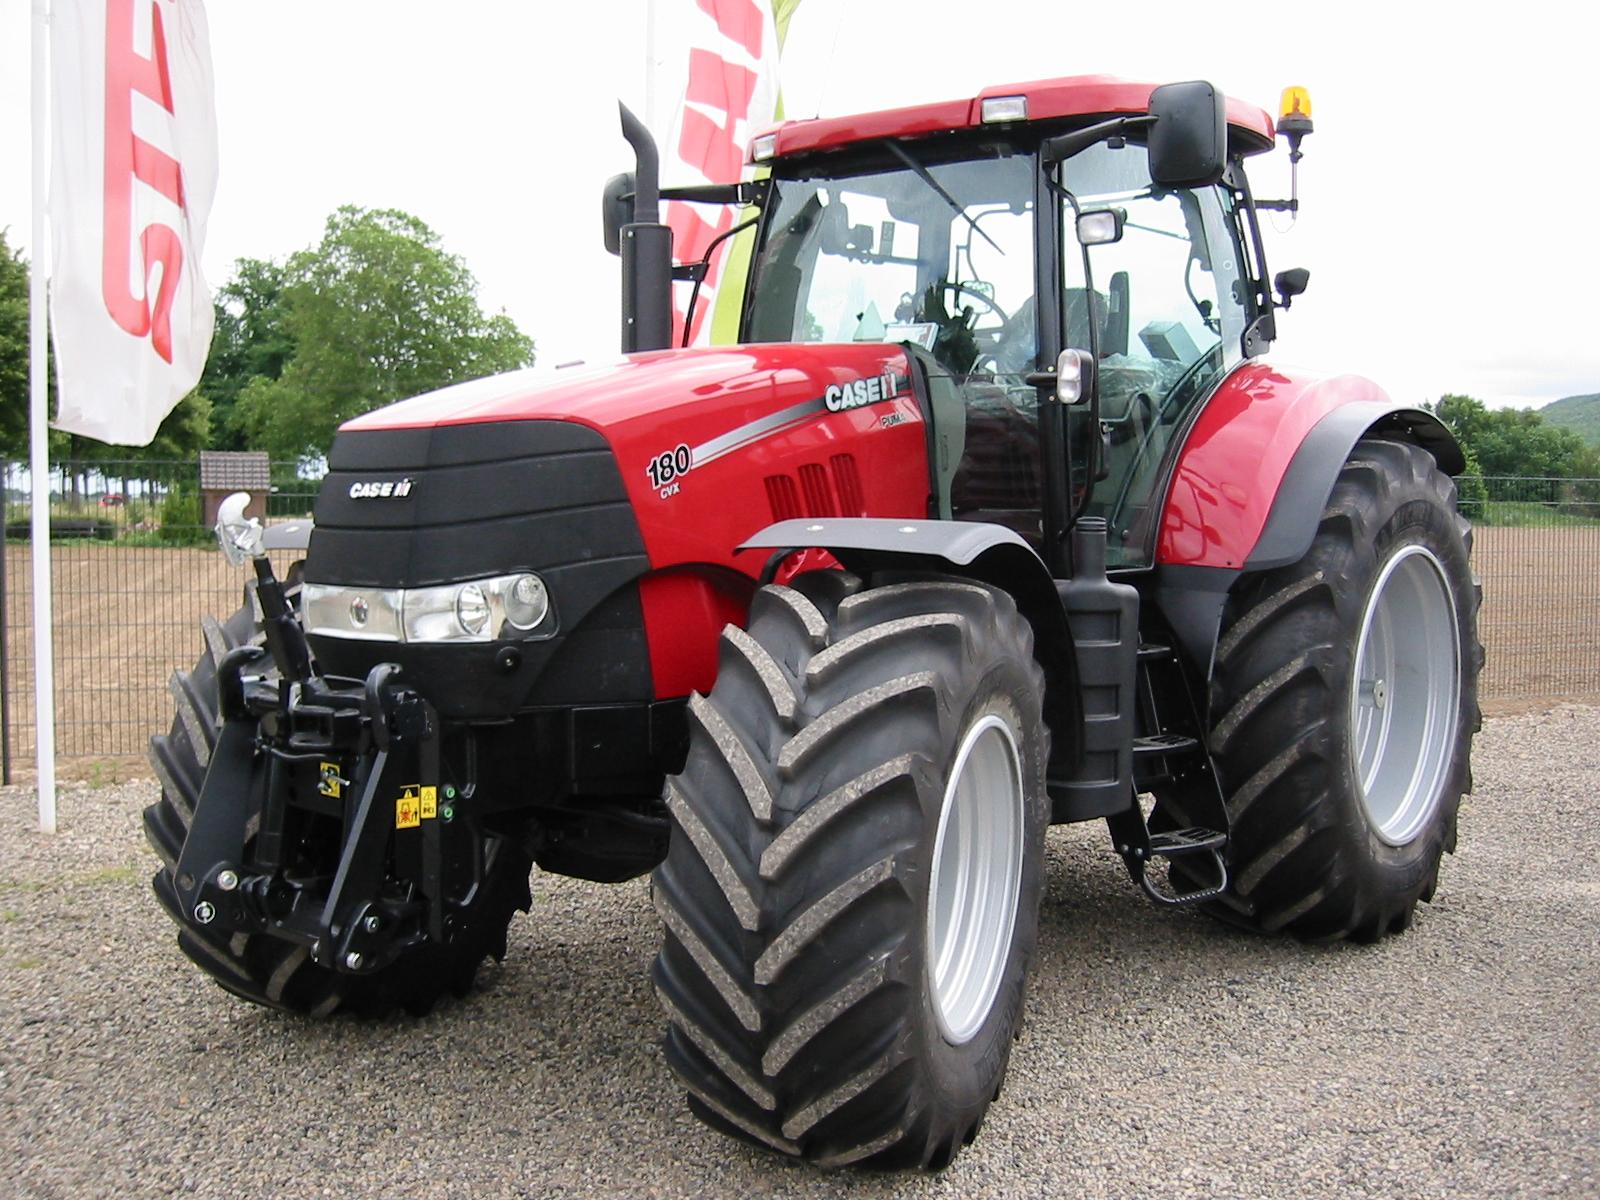 ... farm equipment billy bj equip tractor ih stuff case ihc forward case